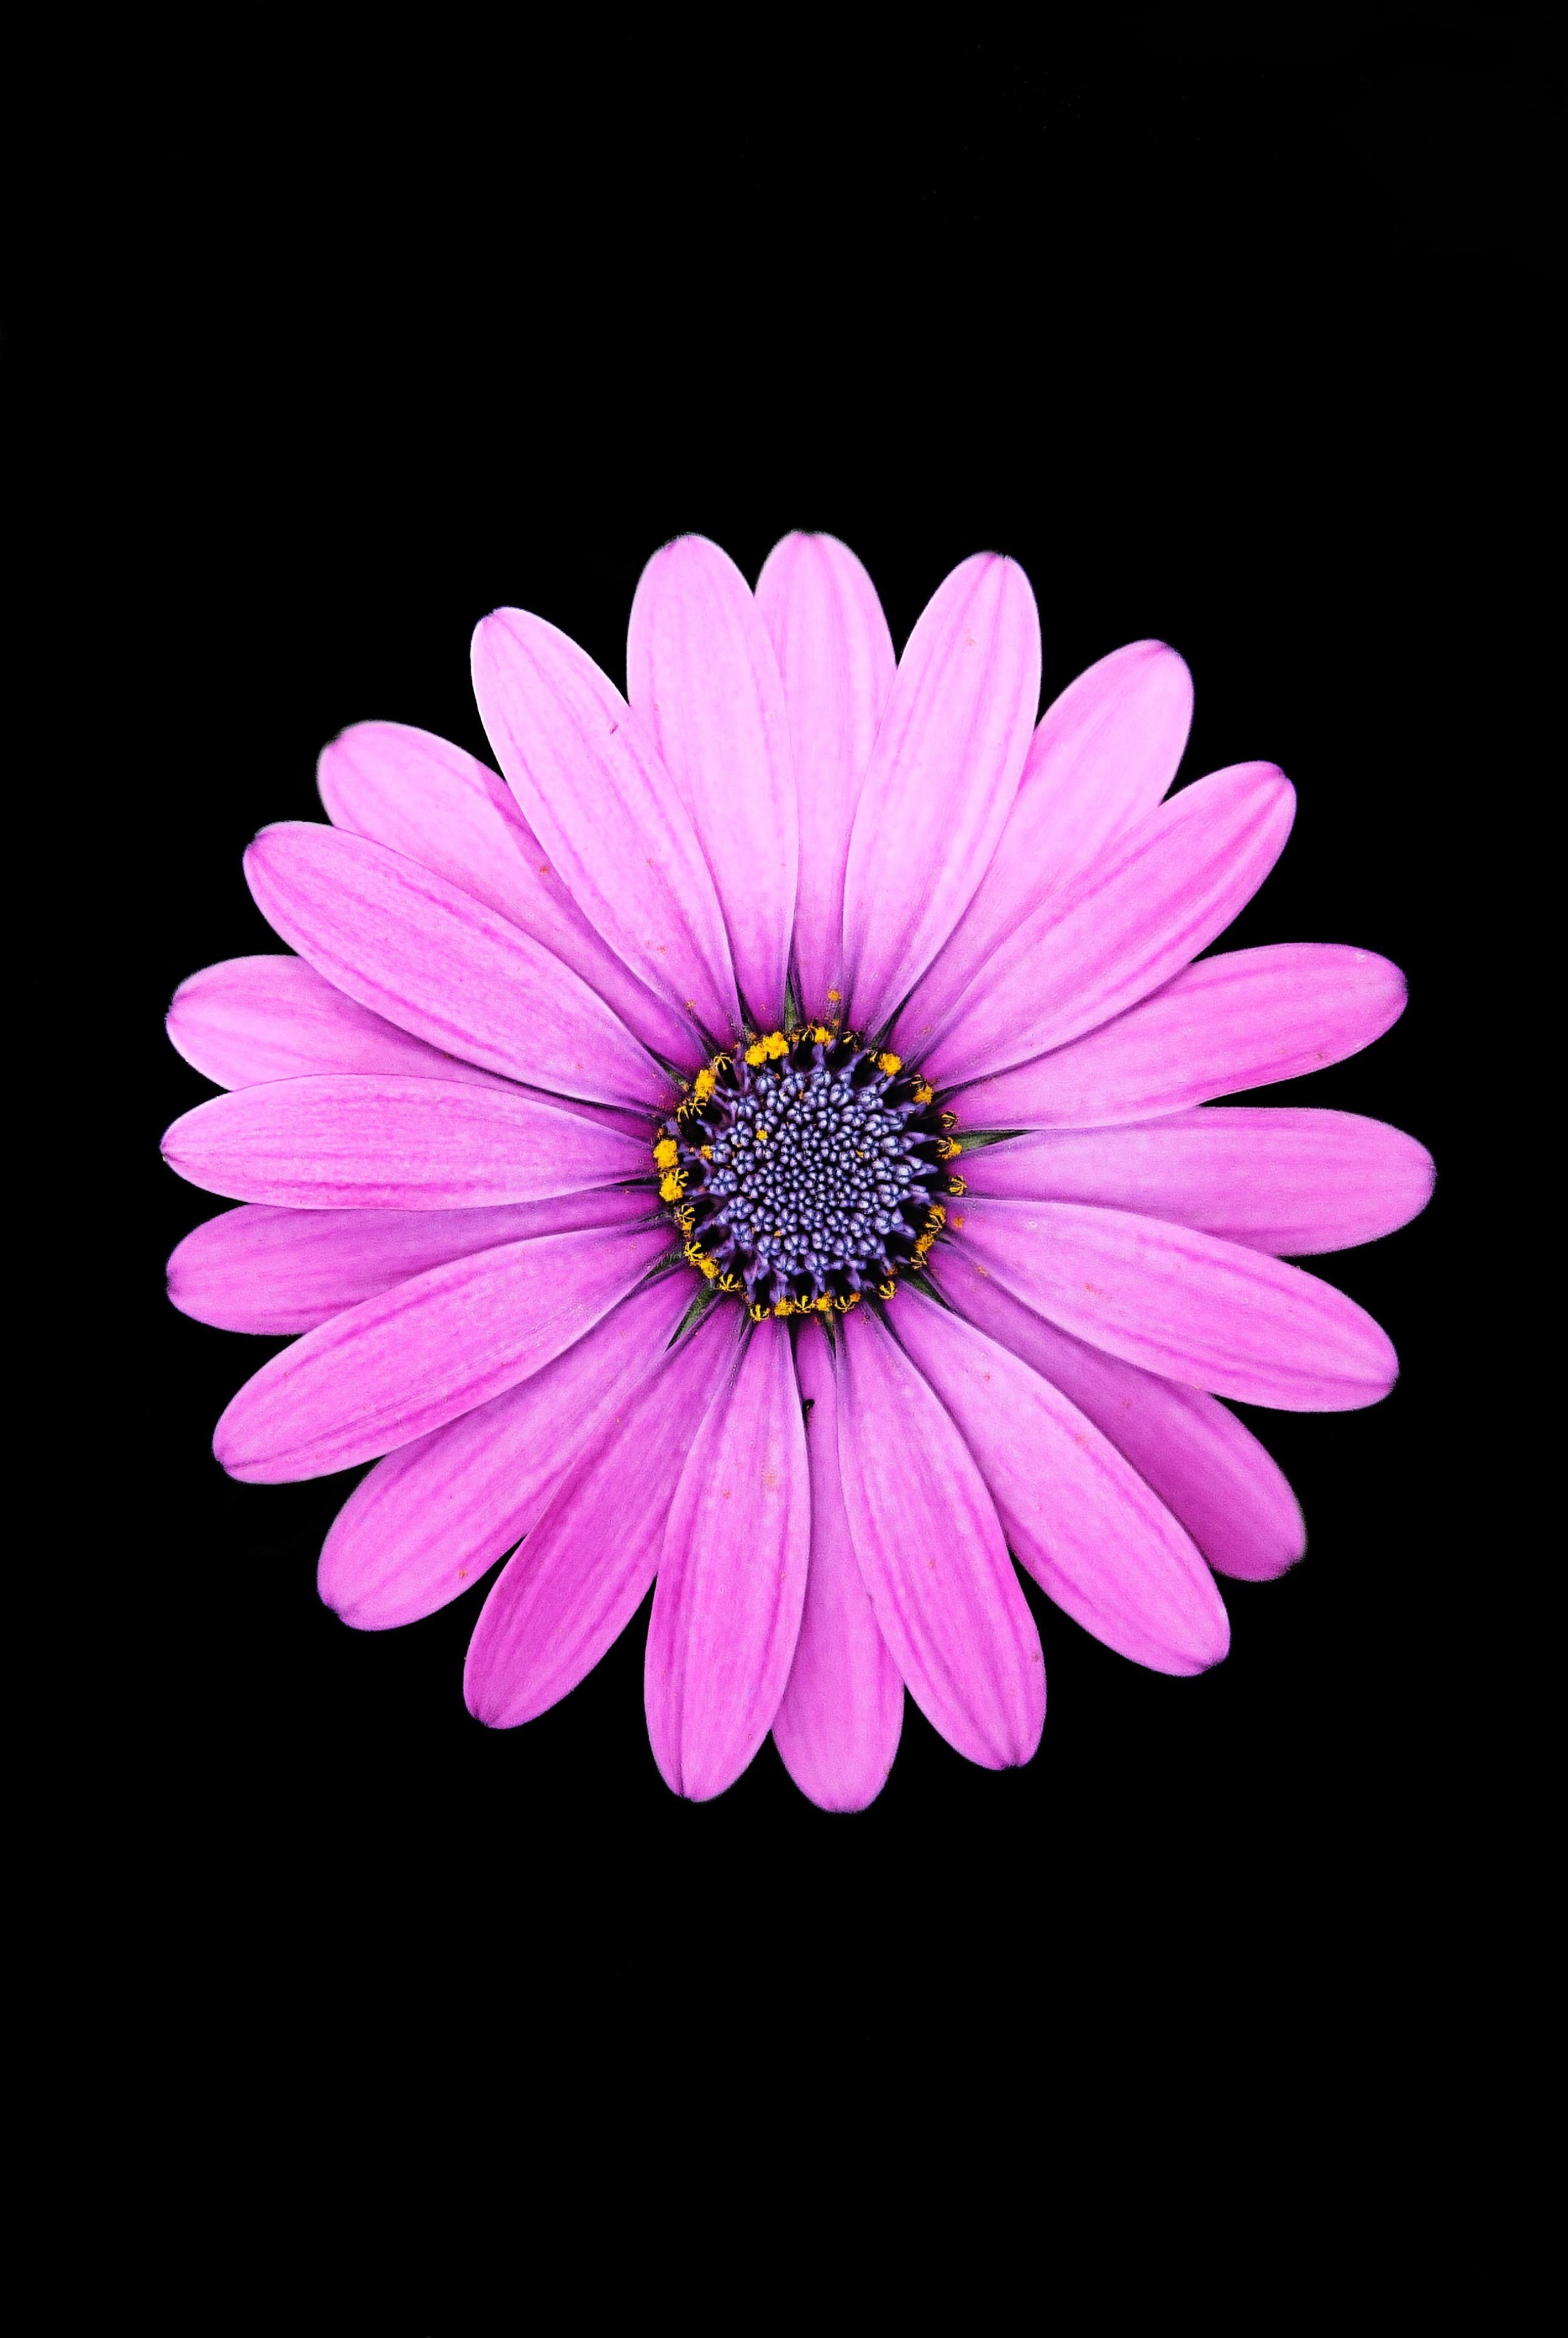 AMOLED Flower Wallpaper. Purple daisy, Dark wallpaper iphone